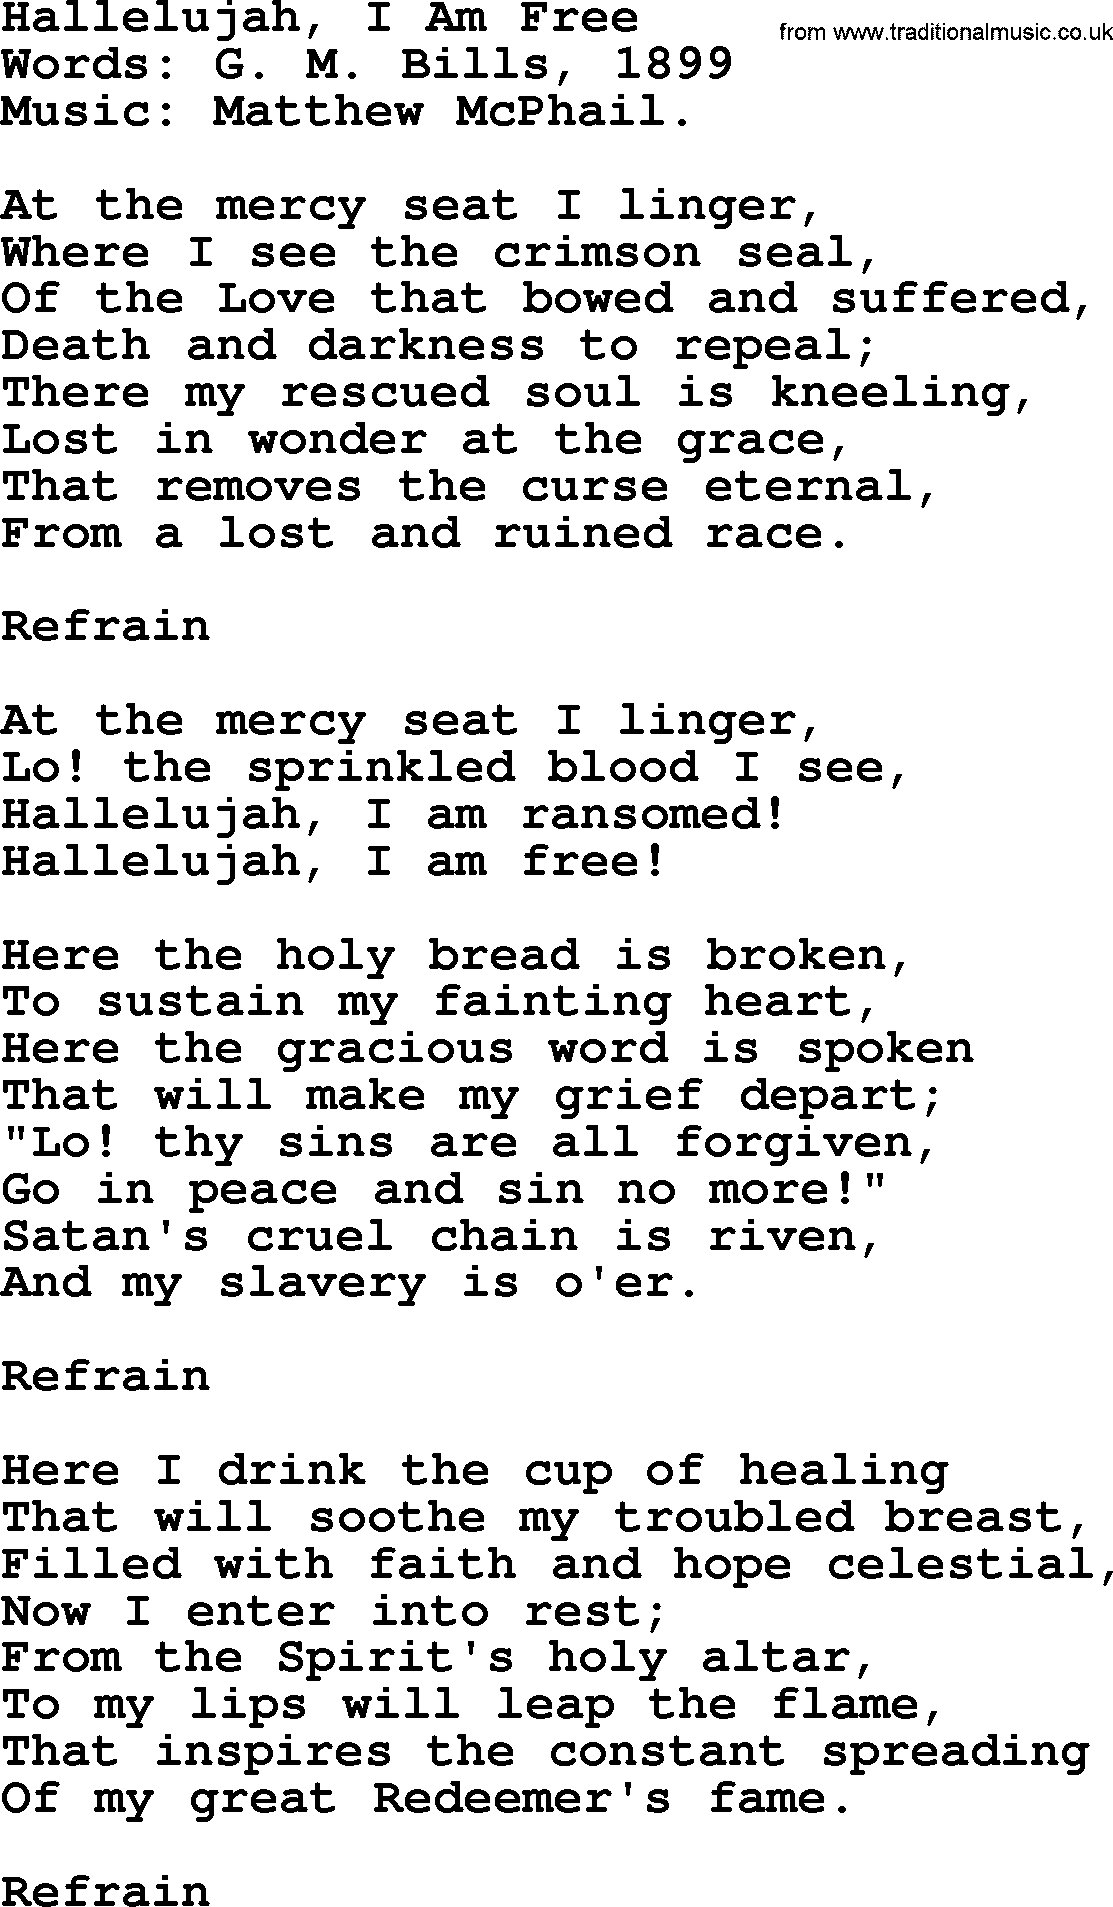 Christian hymns and song lyrics for Communion(The Eucharist): Hallelujah, I Am Free, lyrics with PDF